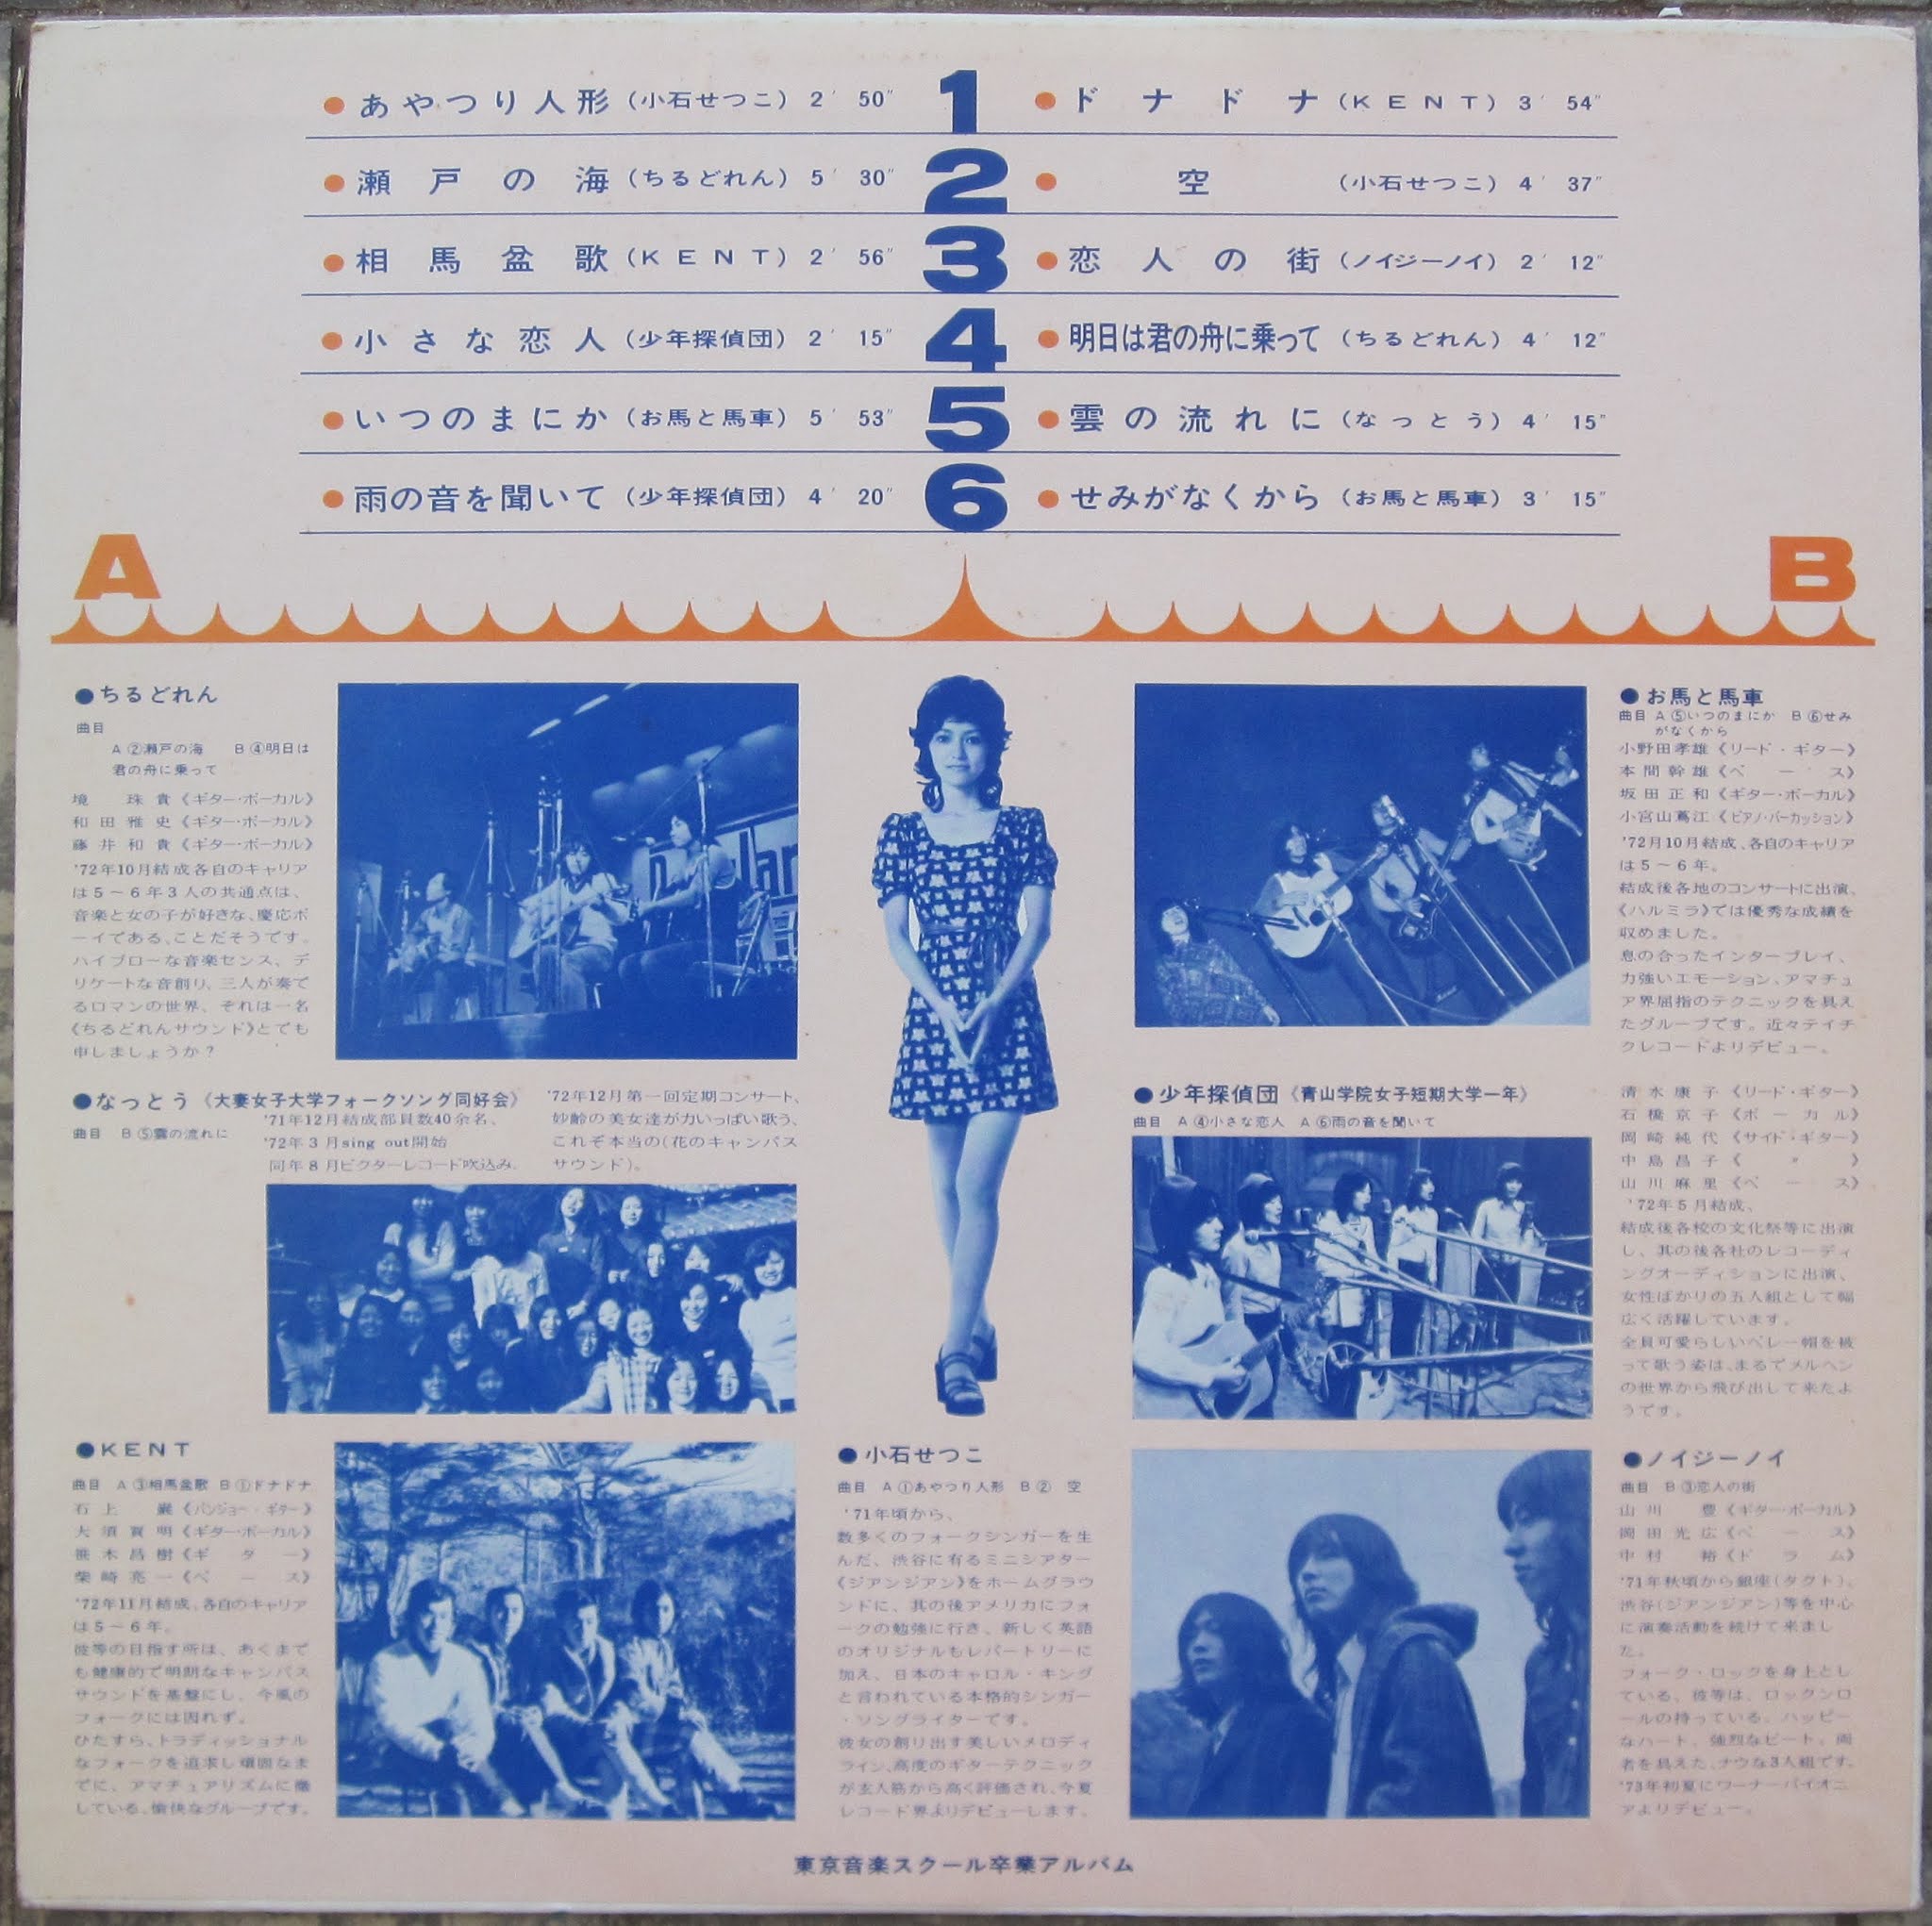 Fantasy V A Tokyo Ongaku School Original Album 処女航海 Maiden Voyage Rare 1973 Private Japanese Lp